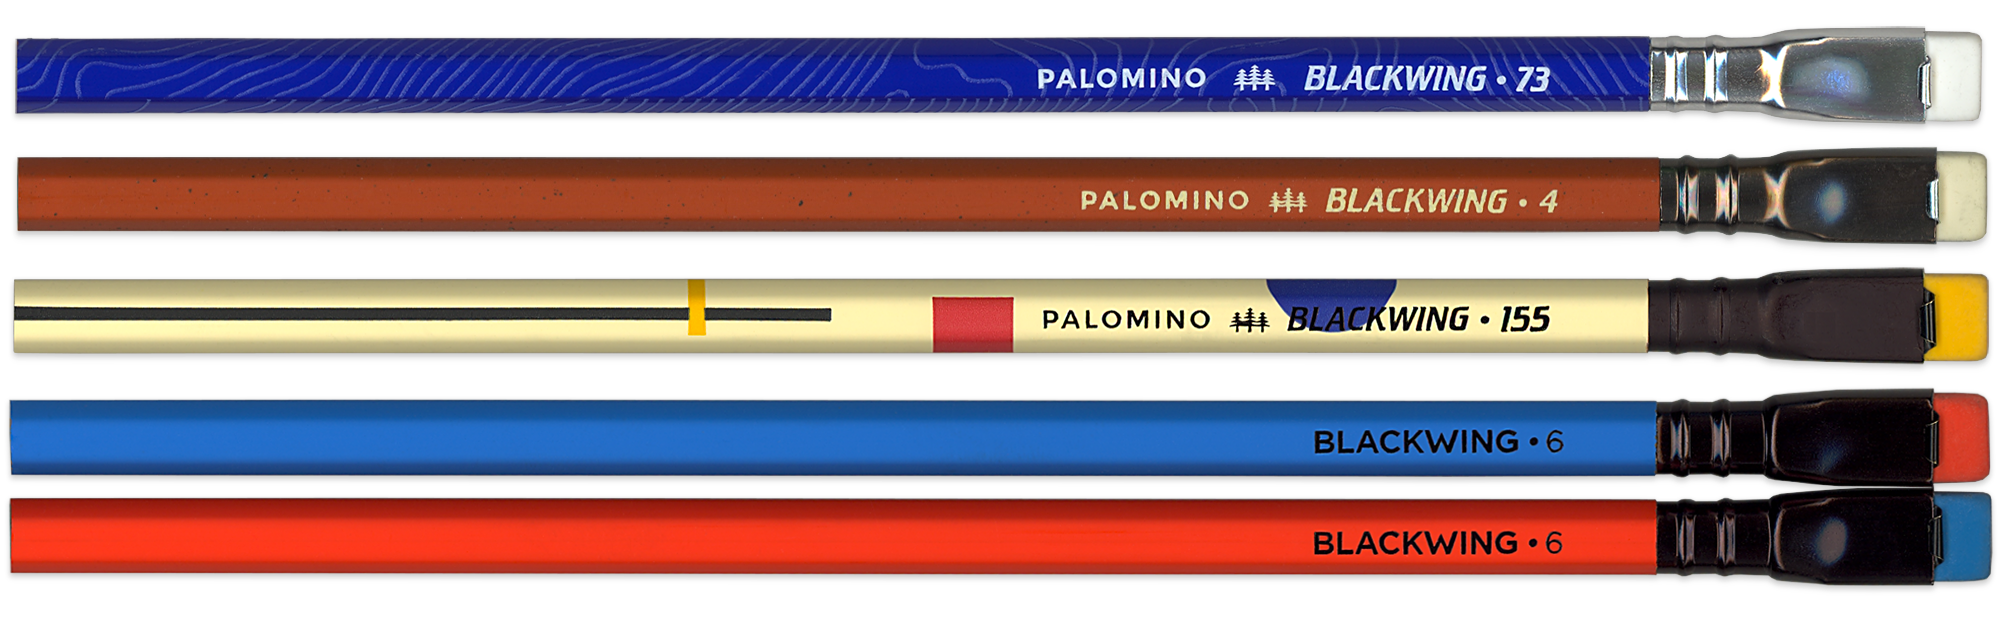 Blackwing Volumes 155 by Palomino